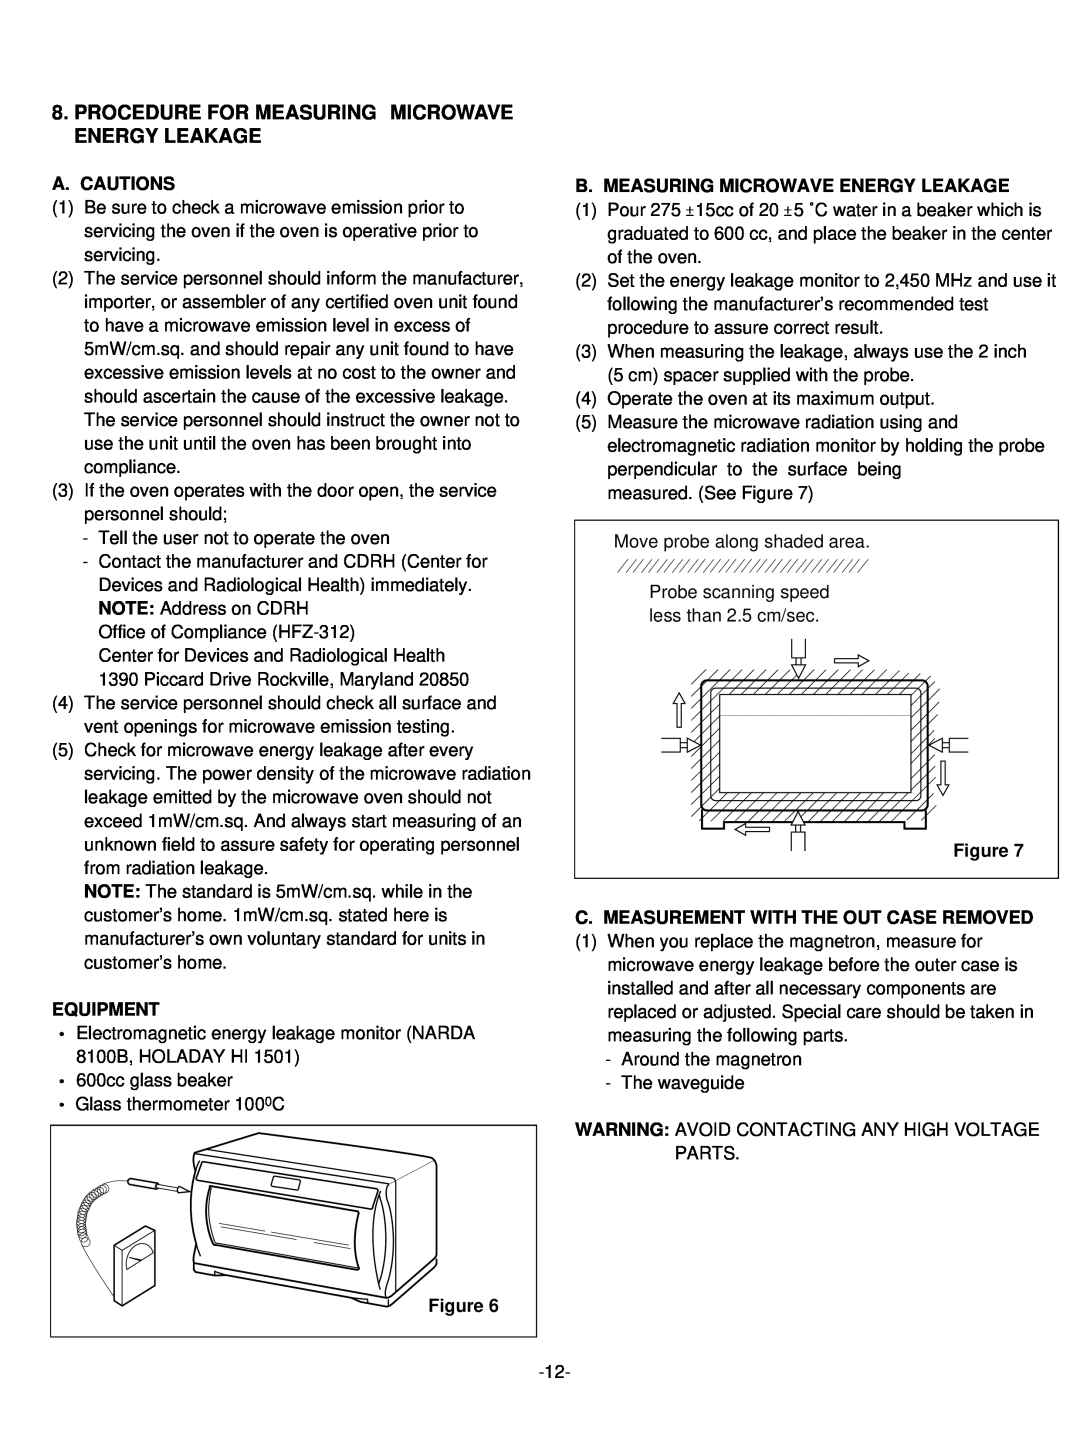 LG Electronics LRMM1430SB, LRMM1430SW manual Procedure For Measuring Microwave Energy Leakage, A. Cautions, Equipment 